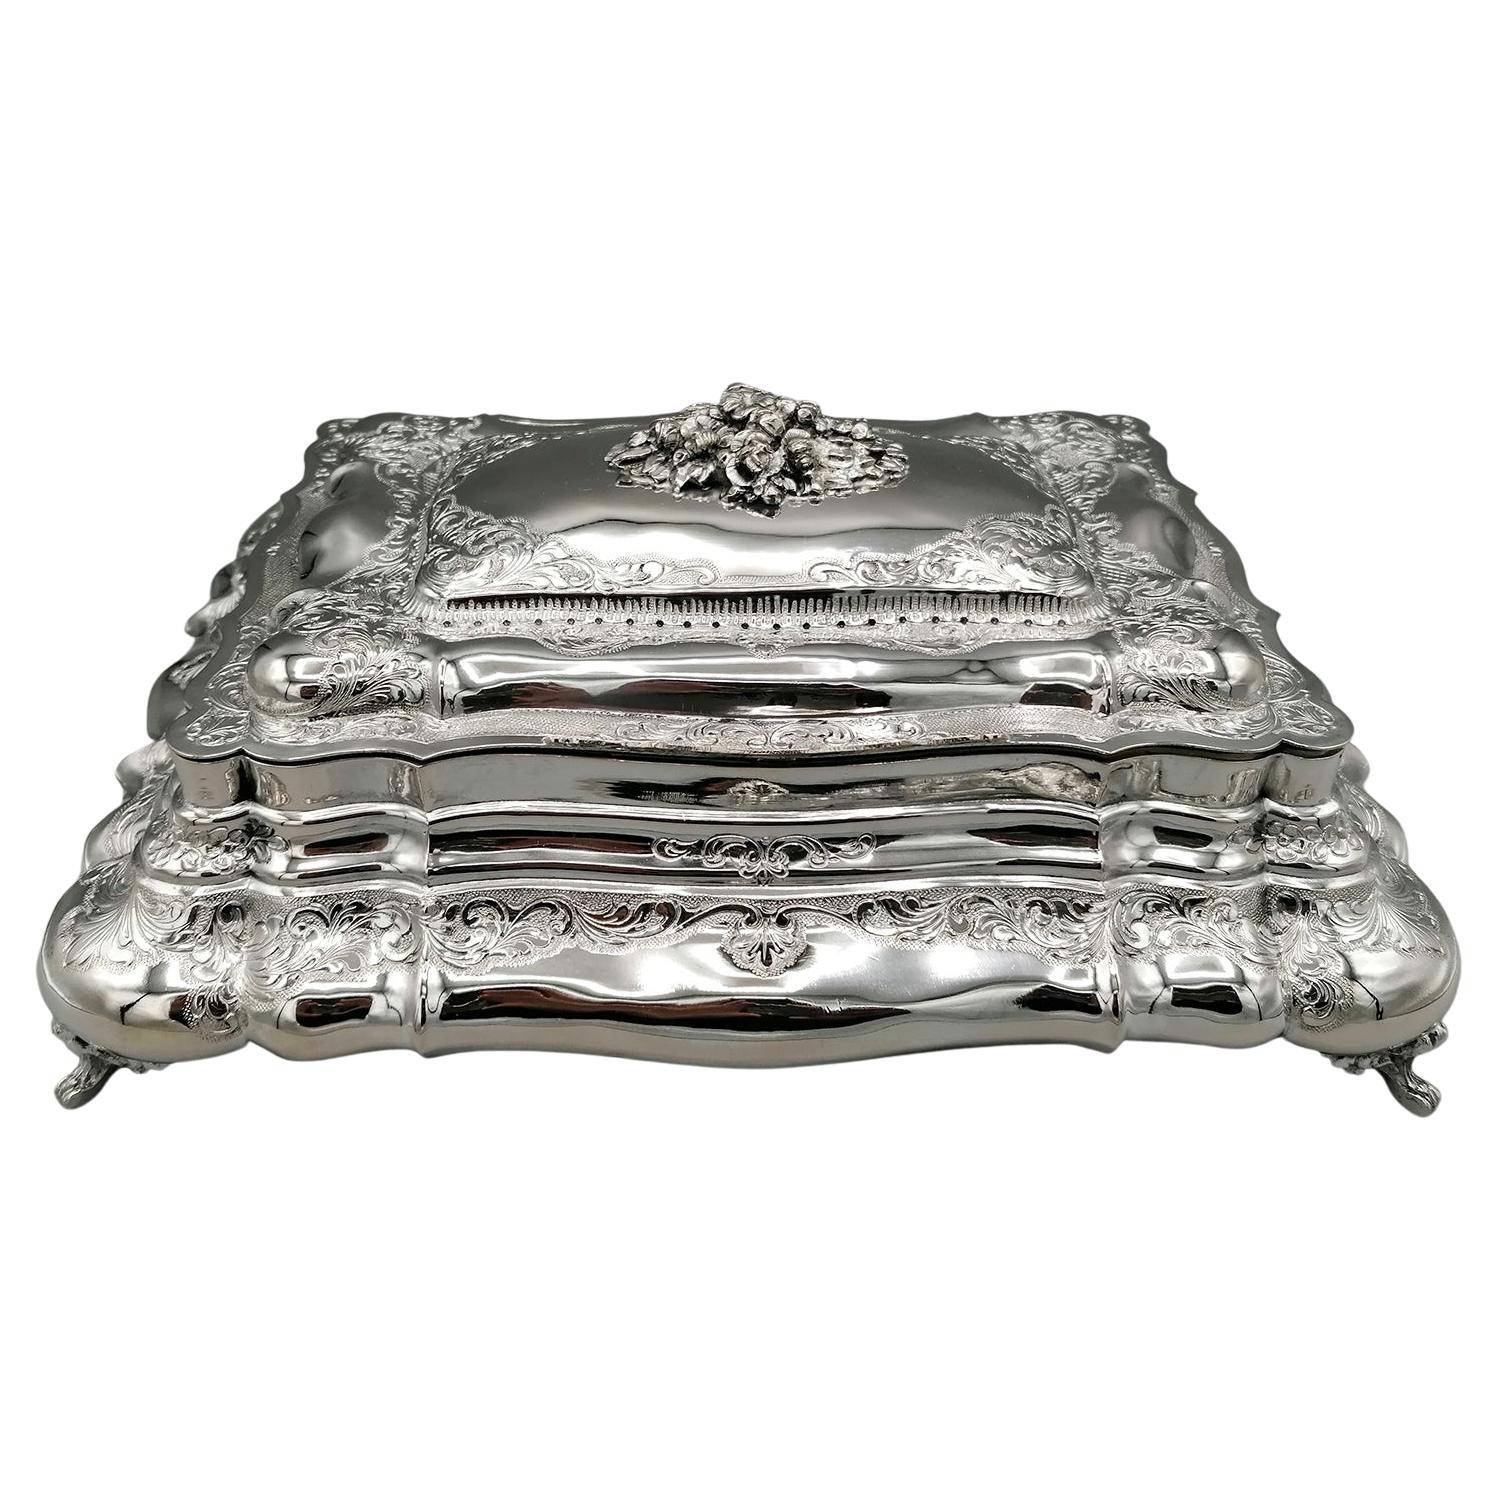 19. Jahrhundert Italienisch Barock Stil Solid Silber Hand Made Schmuckkästchen Fall